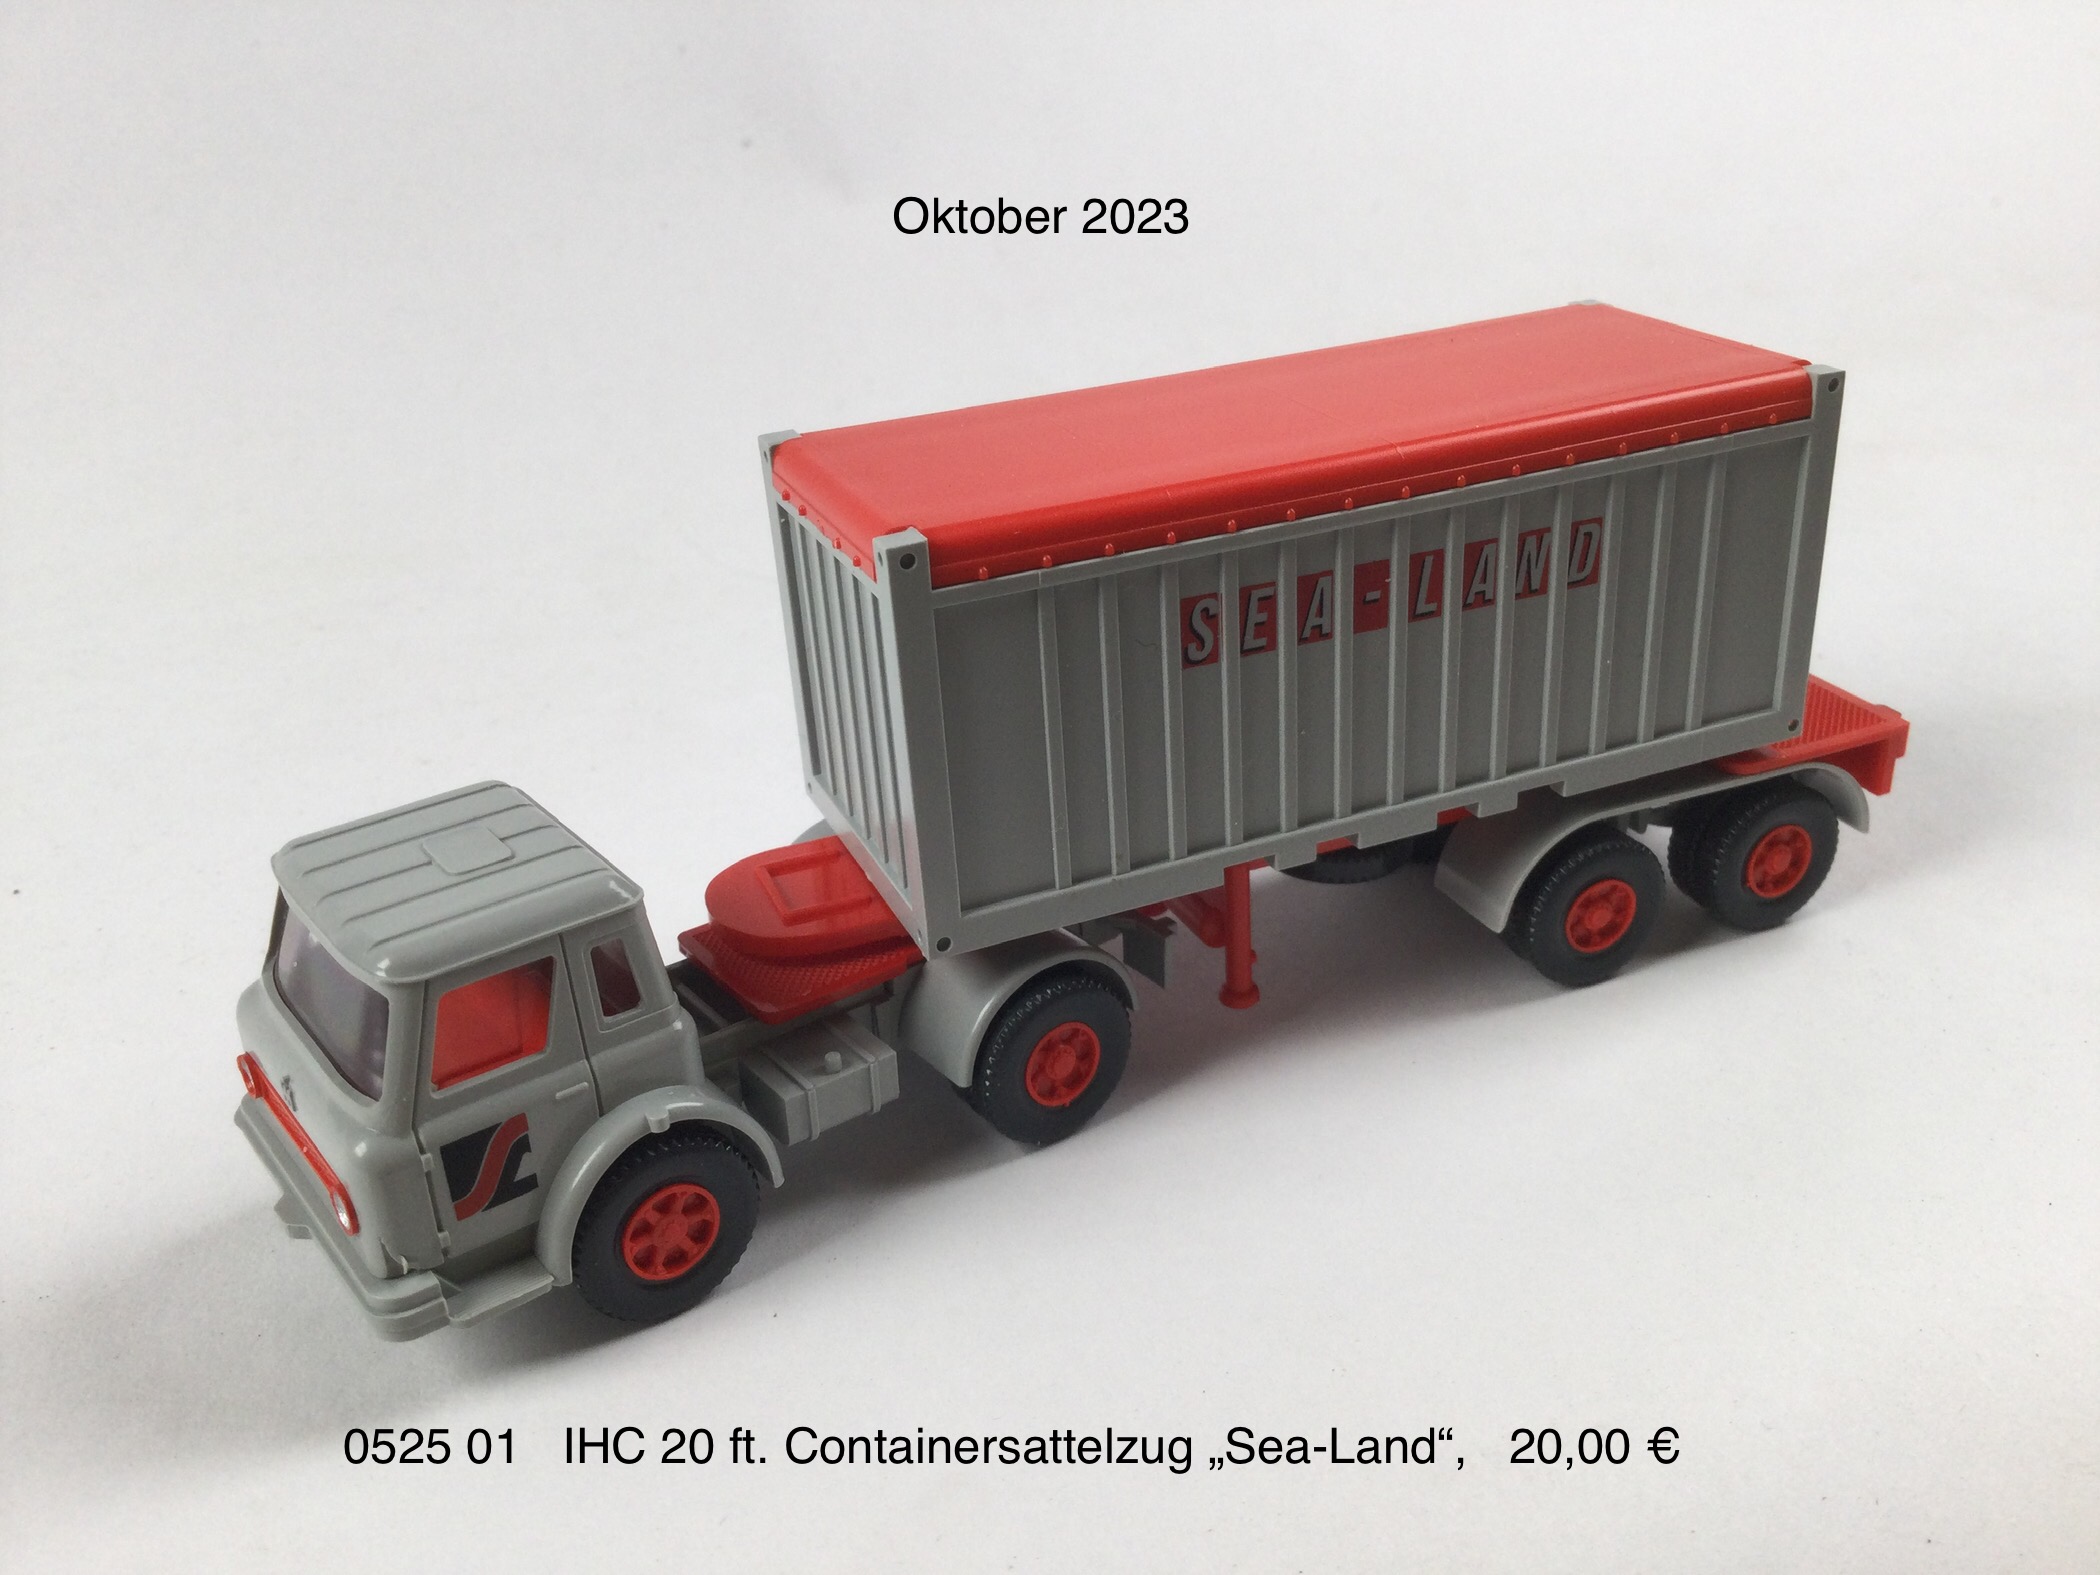 IHC 20ft. Containersattelzug "Sealand"